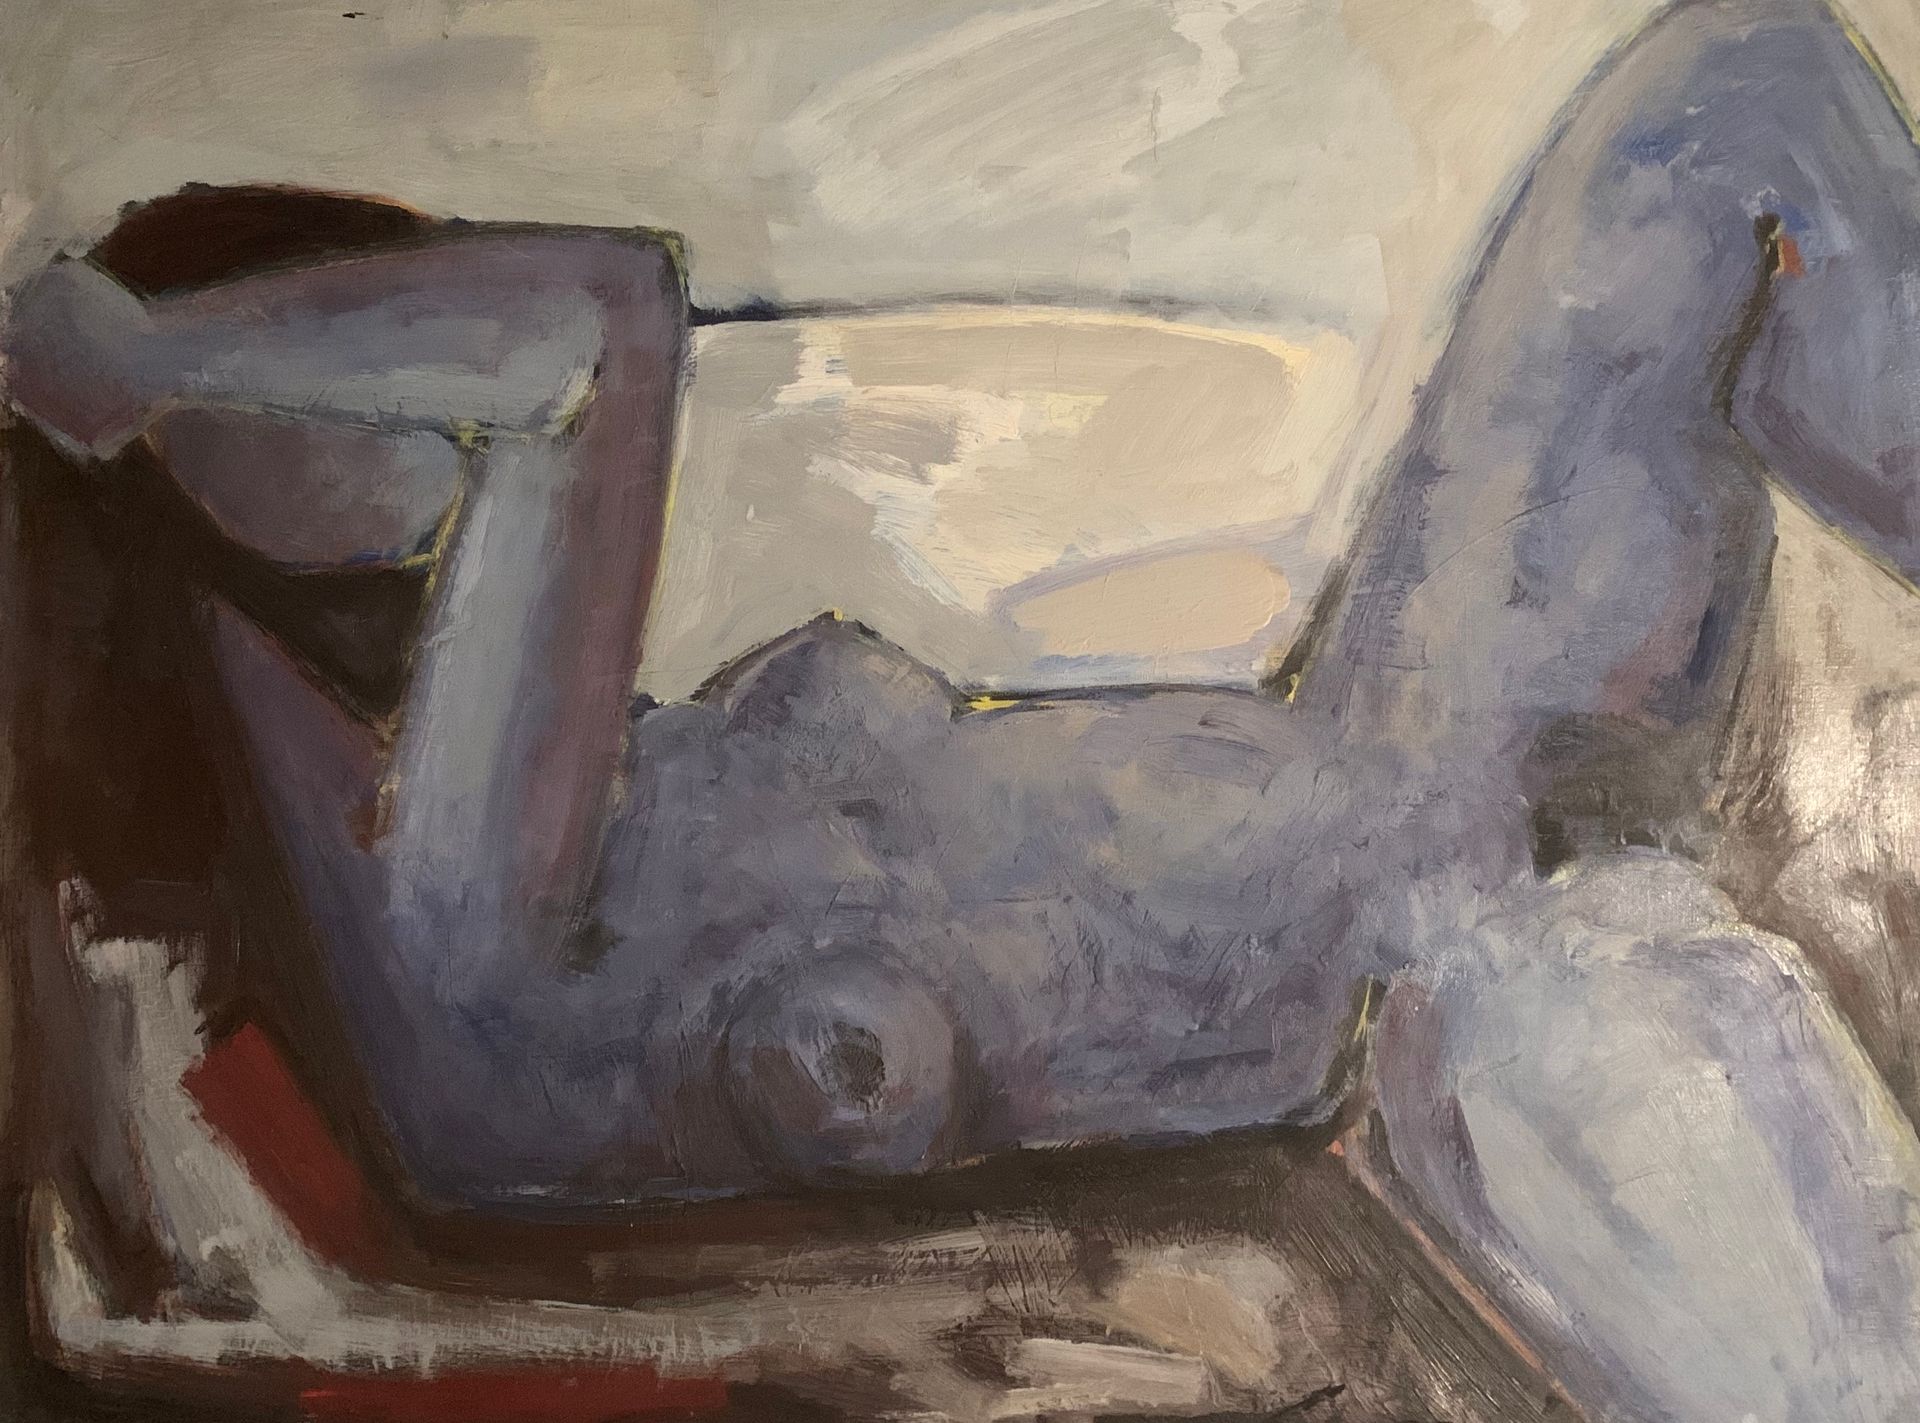 Null 安东尼奥-关斯(1926-2008)

蓝色裸体

布面油画，右下角有签名

 73 x 92 cm